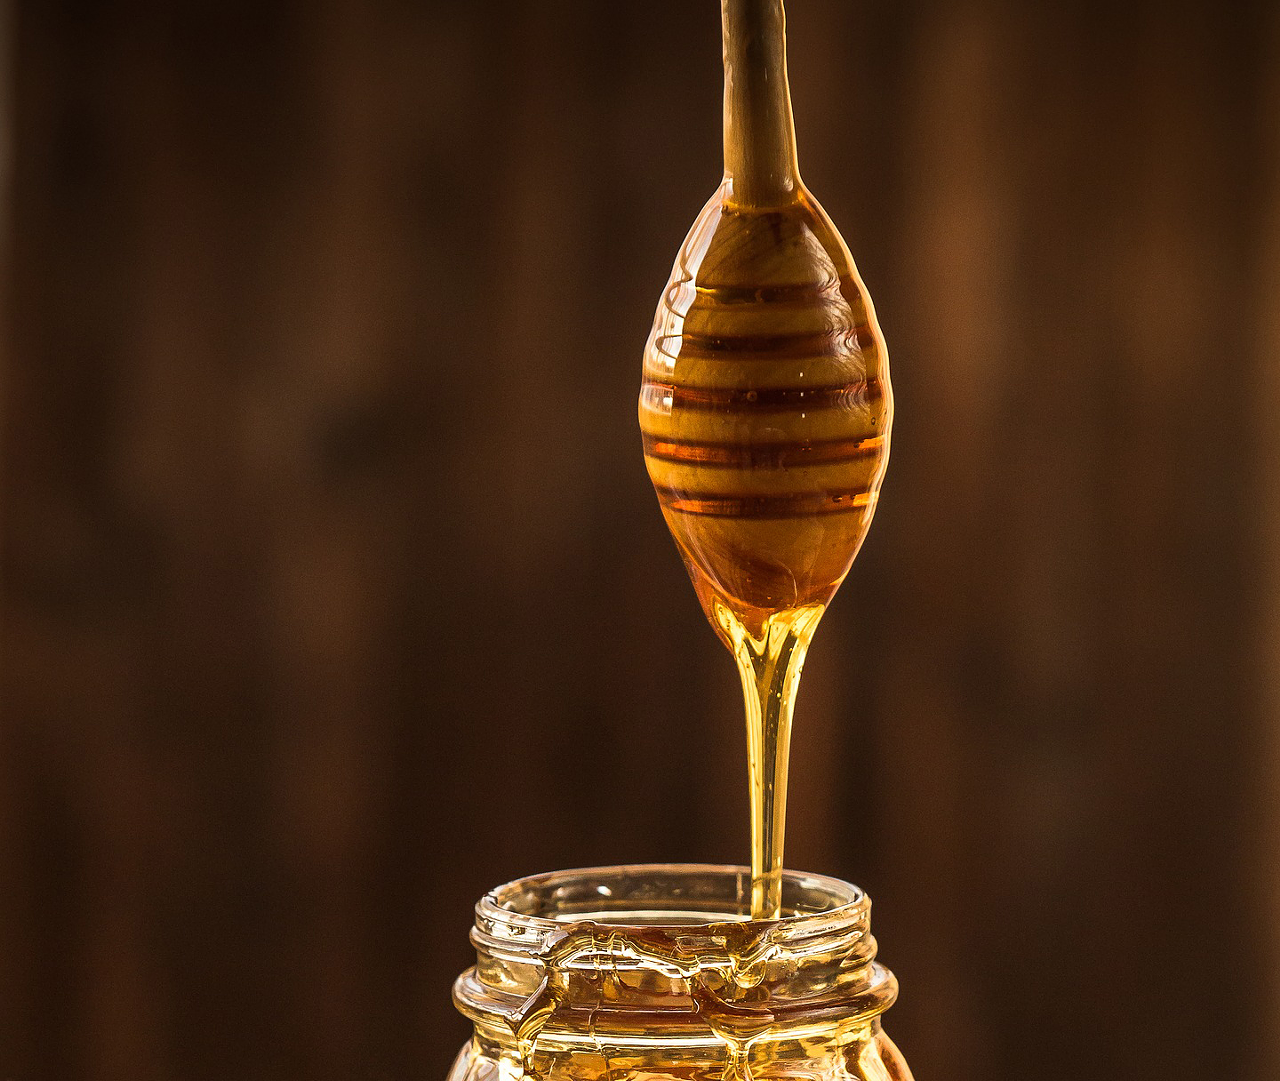 Taste of Honey
12210 USF Pine Drive, Tampa
Saturday, 2-5 p.m.
Photo via Pixabay